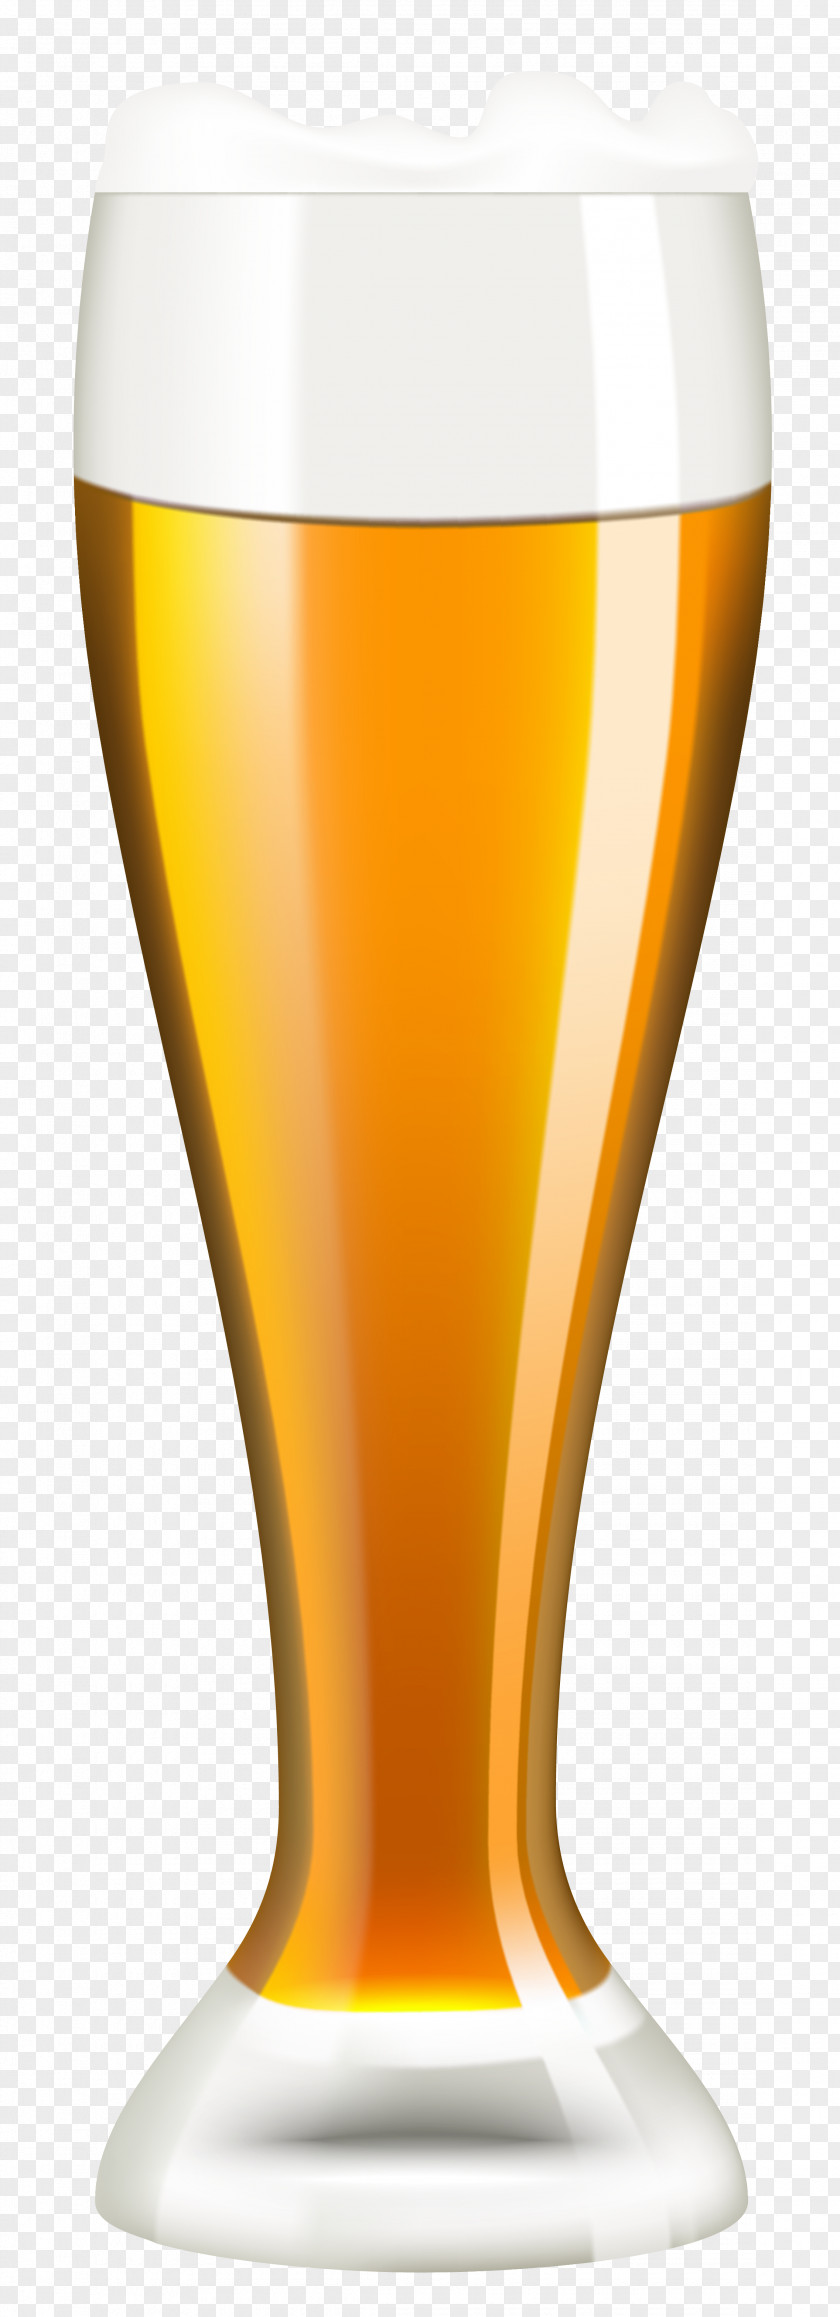 Beer Vector Clipart Image Glassware Cocktail Oktoberfest PNG